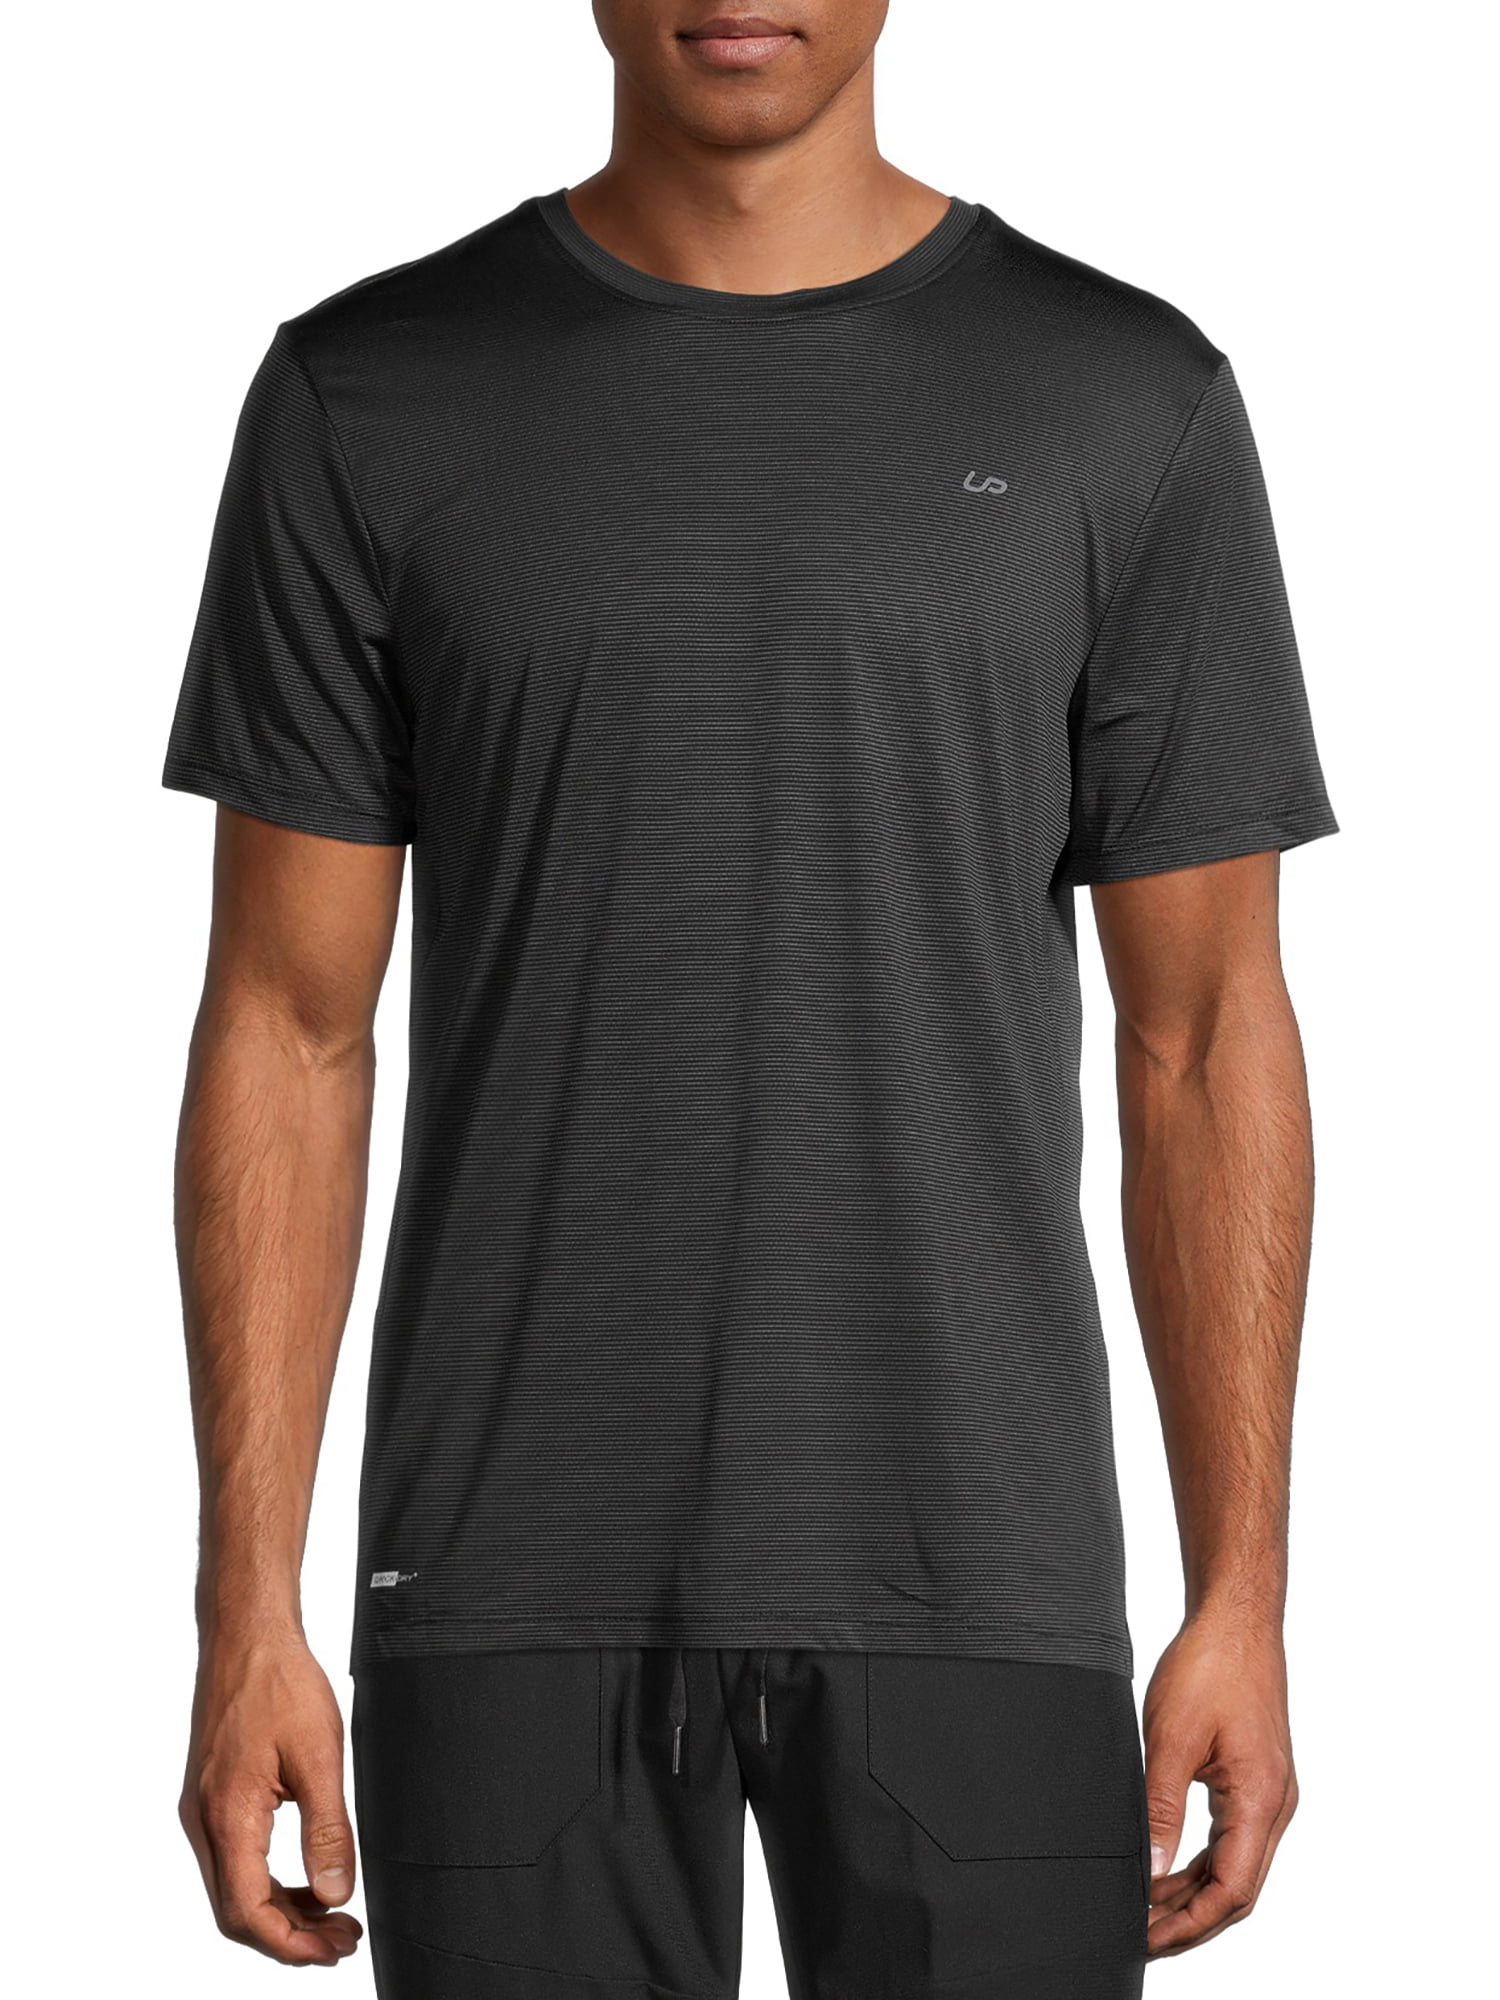 UniPro Men's Texture Training T-Shirt, up to Size 2XL - Walmart.com